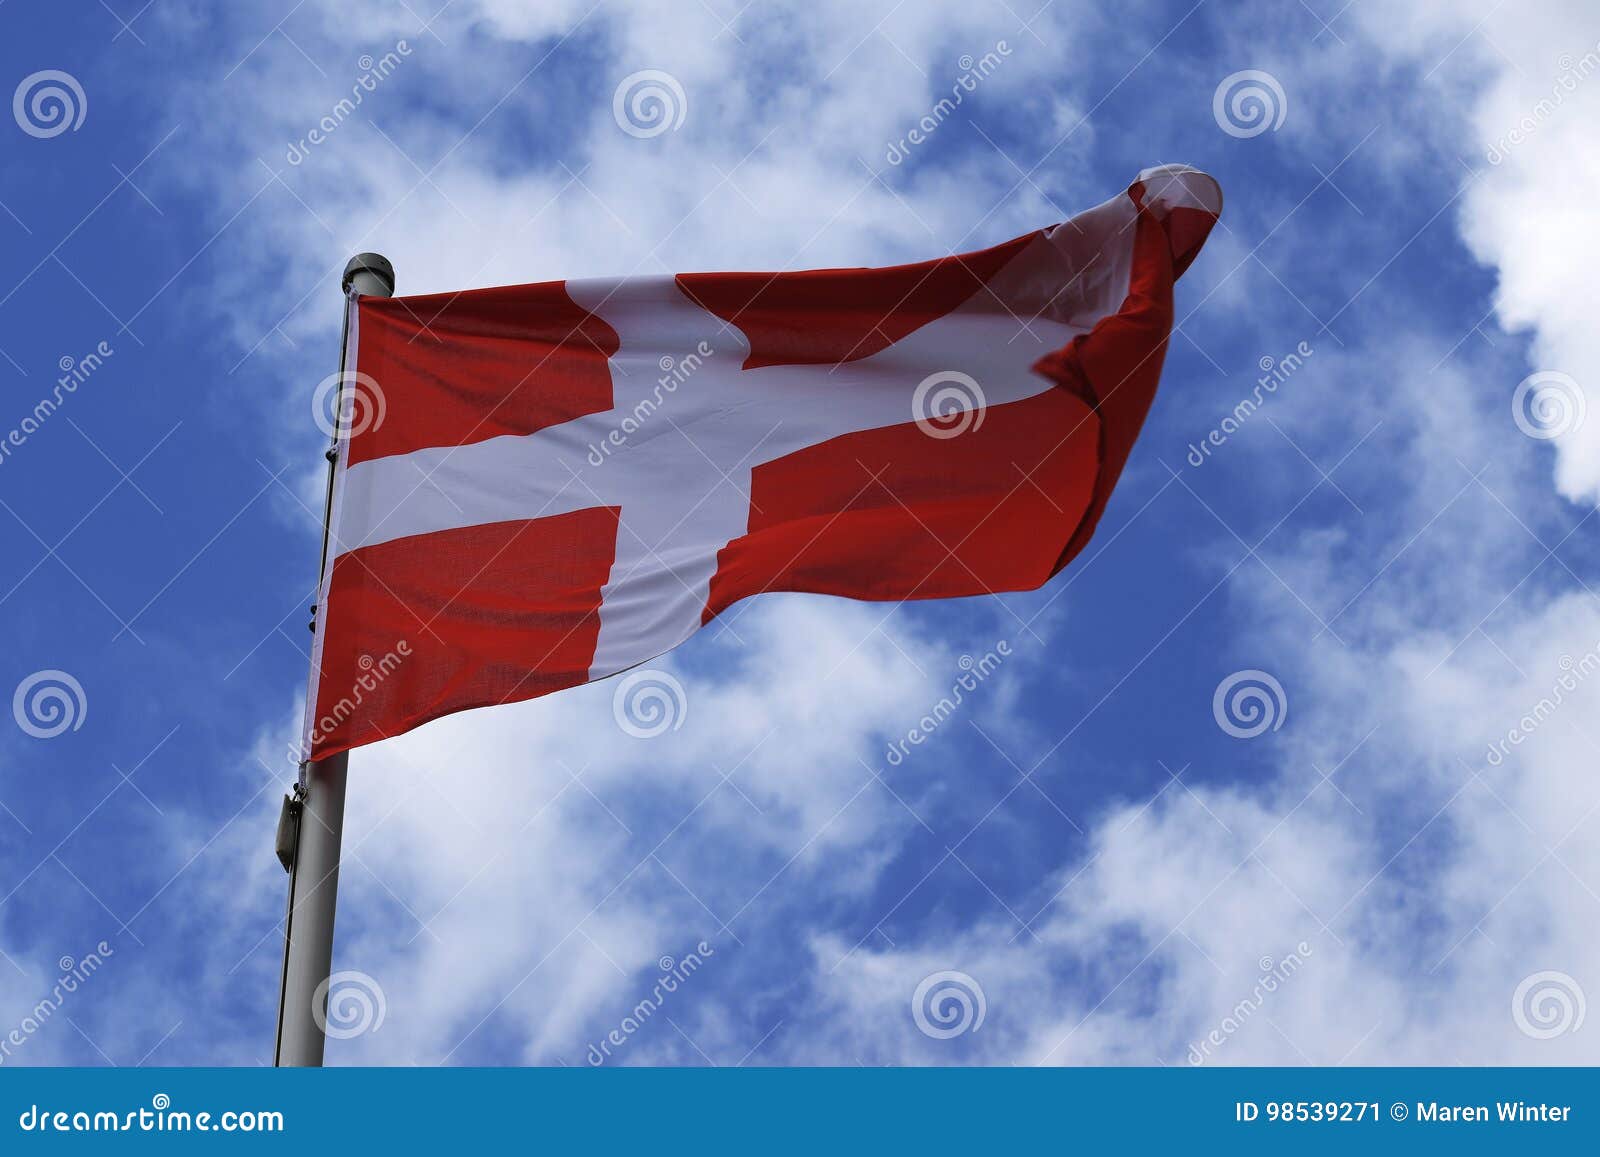 vandring en lille Detektiv Flag of Denmark, White Cross on a Red Background, National Symbol Stock  Image - Image of outdoor, country: 98539271